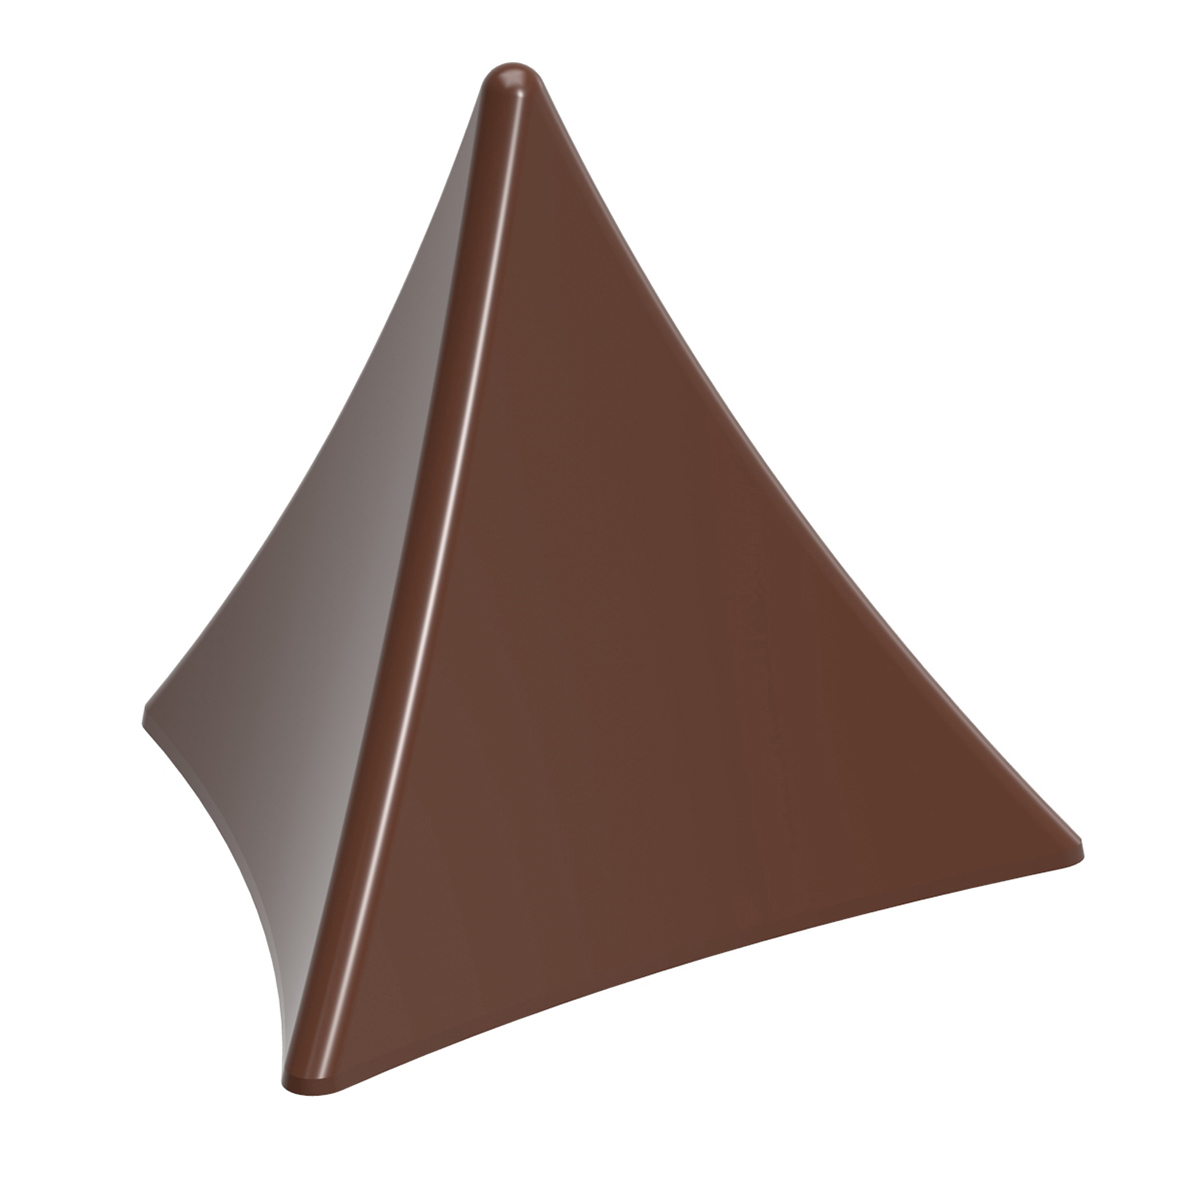 Billede af Professionel chokoladeform i polycarbonat - Praline Pyramid - Frank Haasnoot CW1951